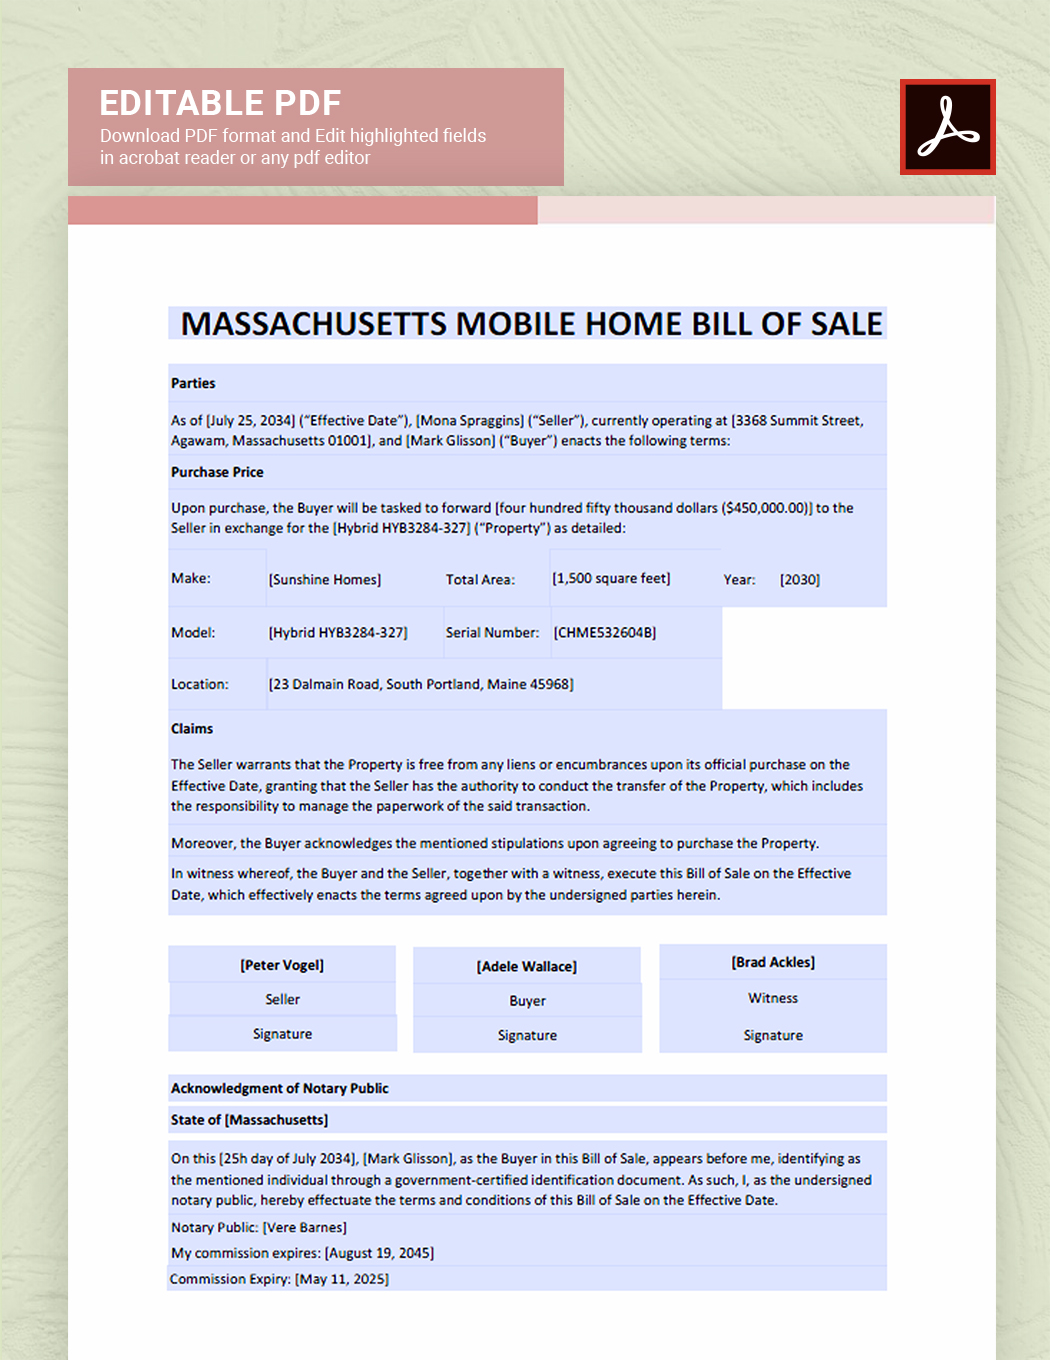 Massachusetts Mobile Home Bill of Sale Template